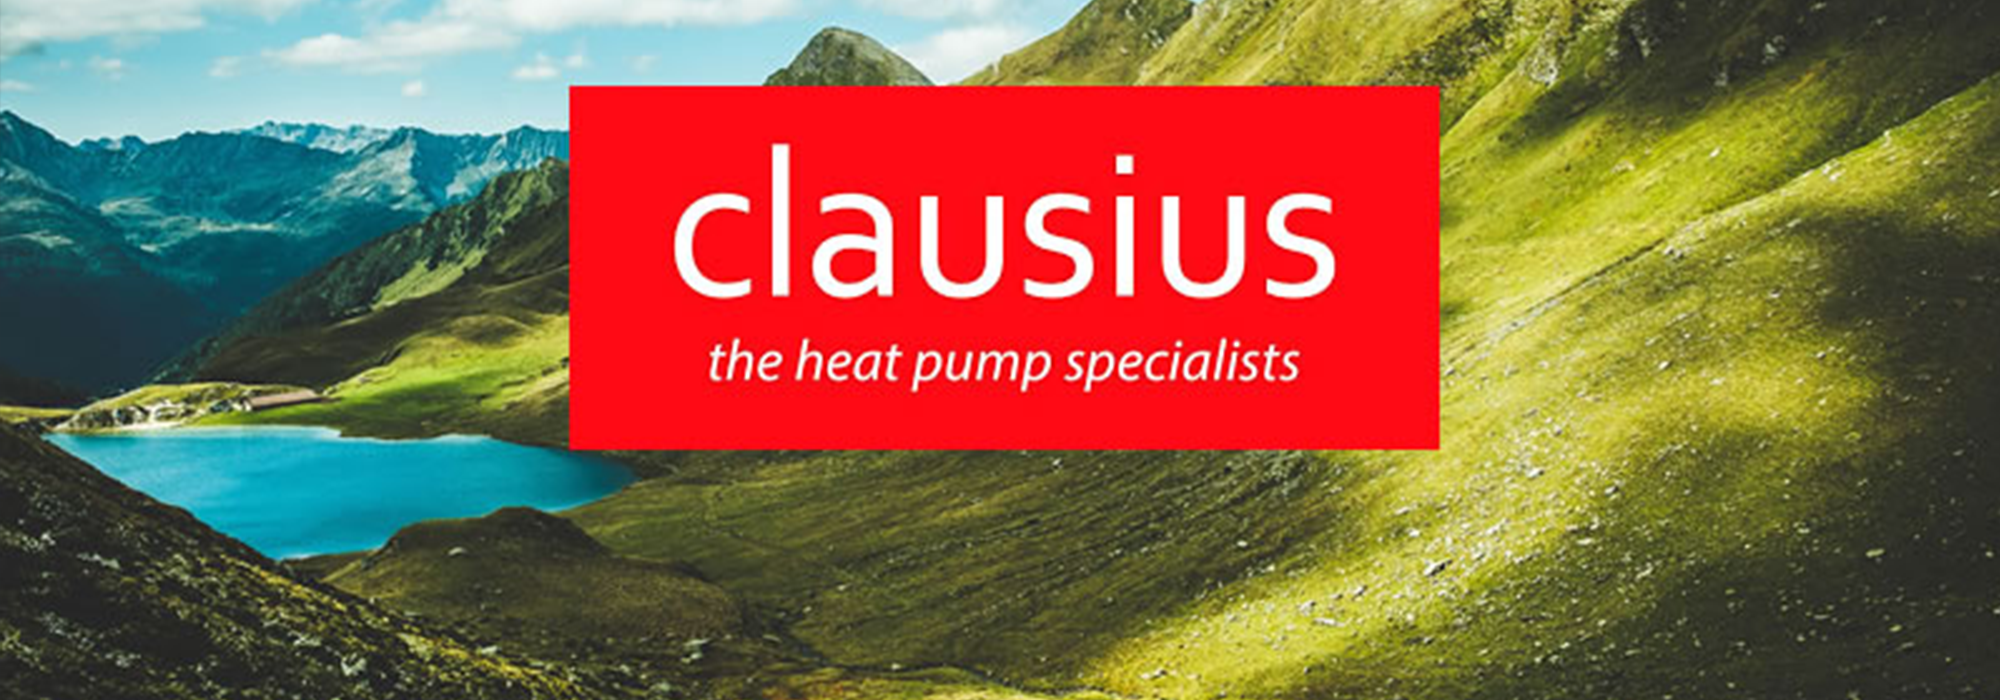 Clausius-heat-pumps-banner